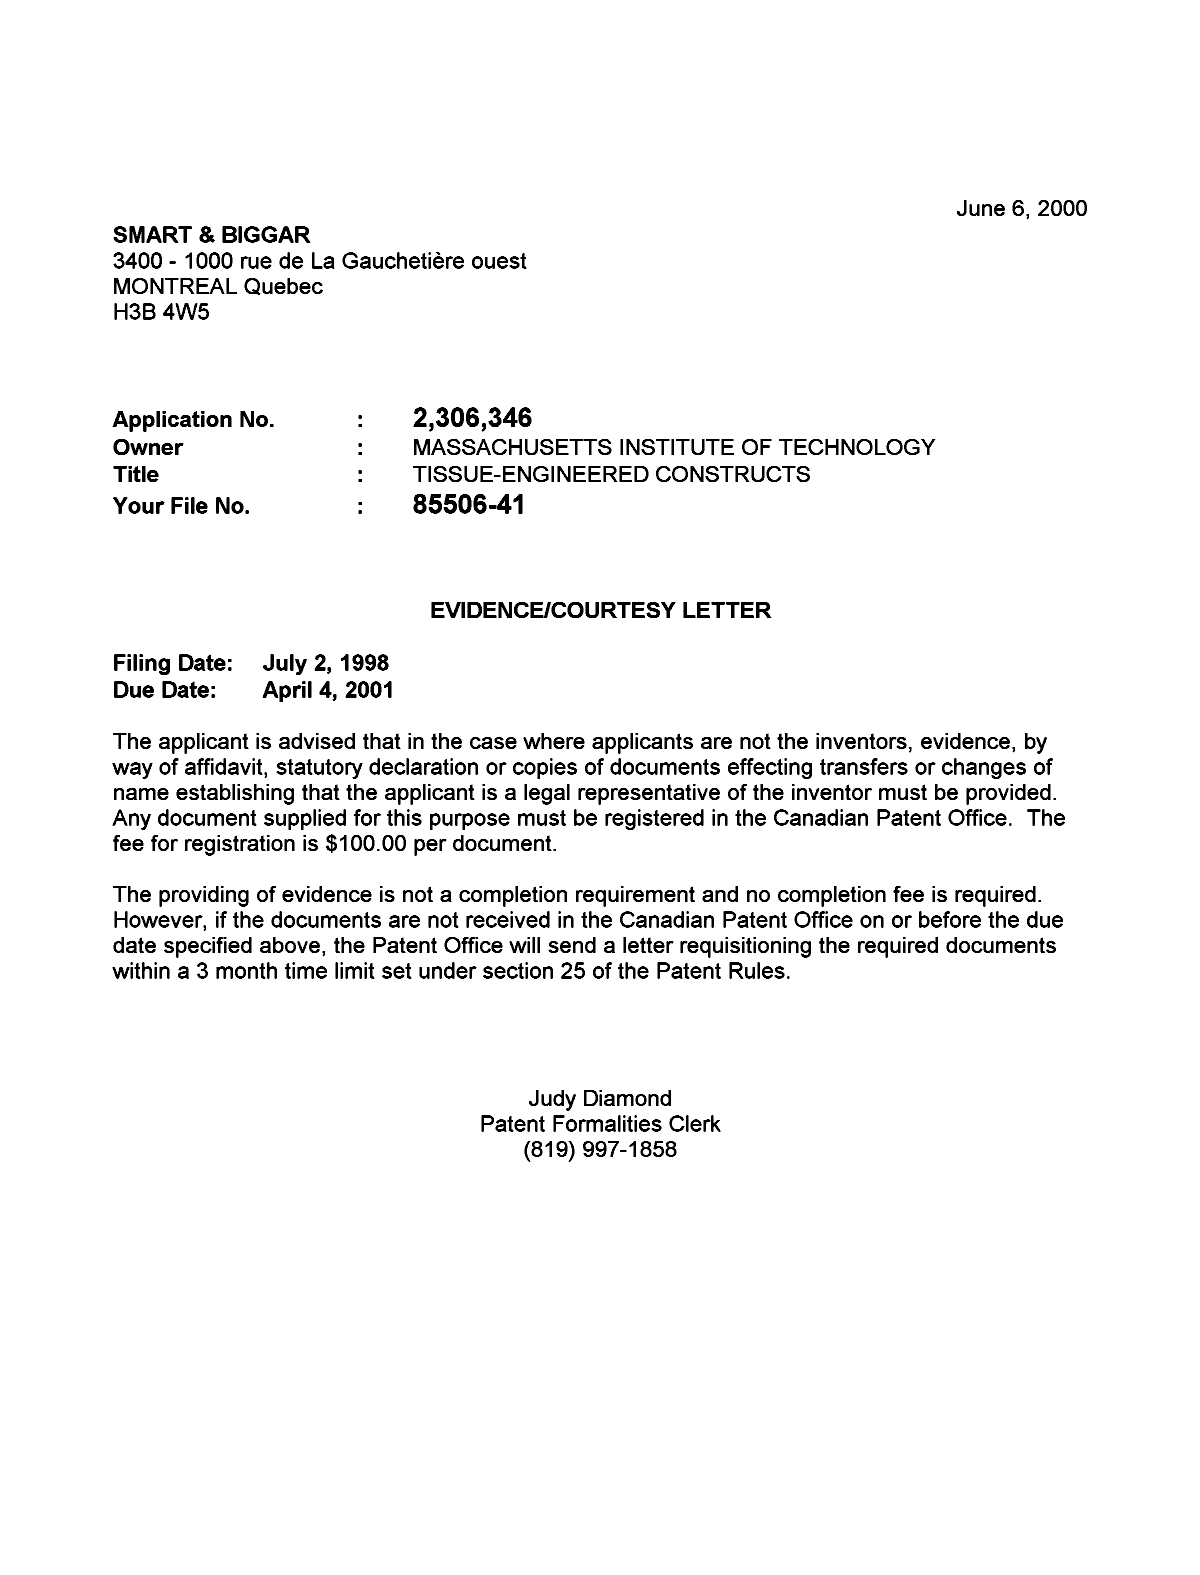 Canadian Patent Document 2306346. Correspondence 20000531. Image 1 of 1